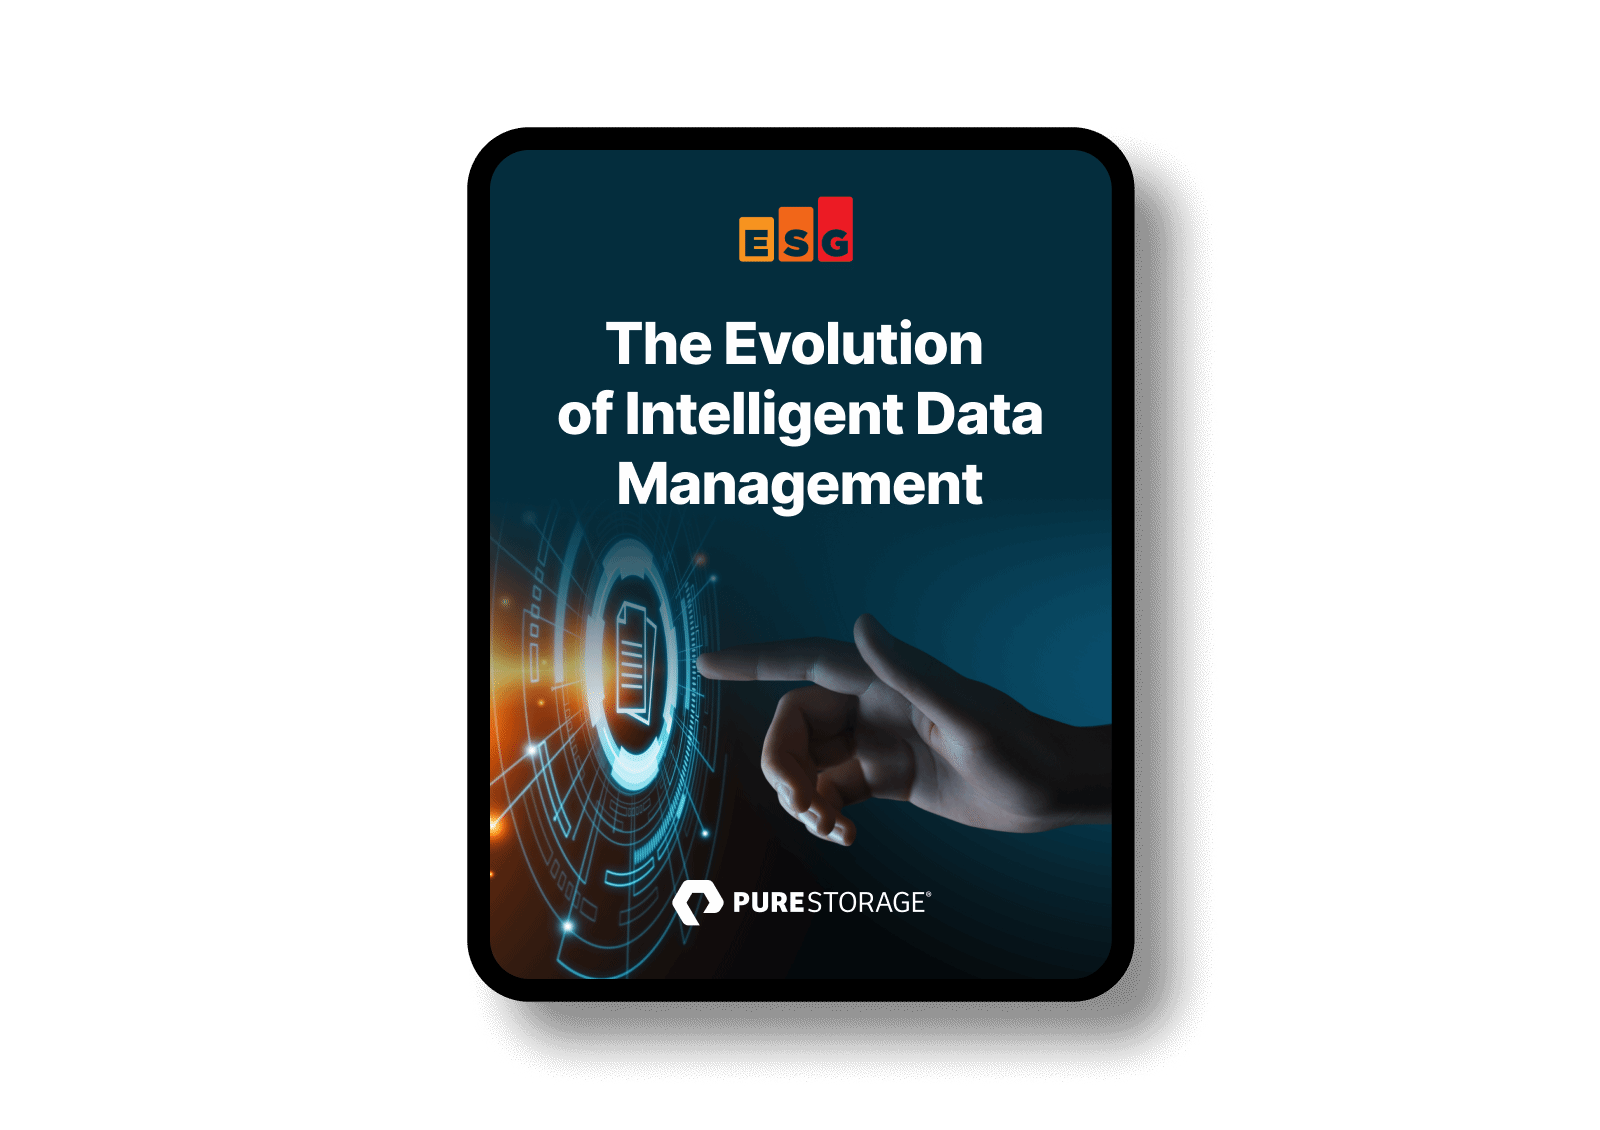 The Benefits of Intelligent Data Management